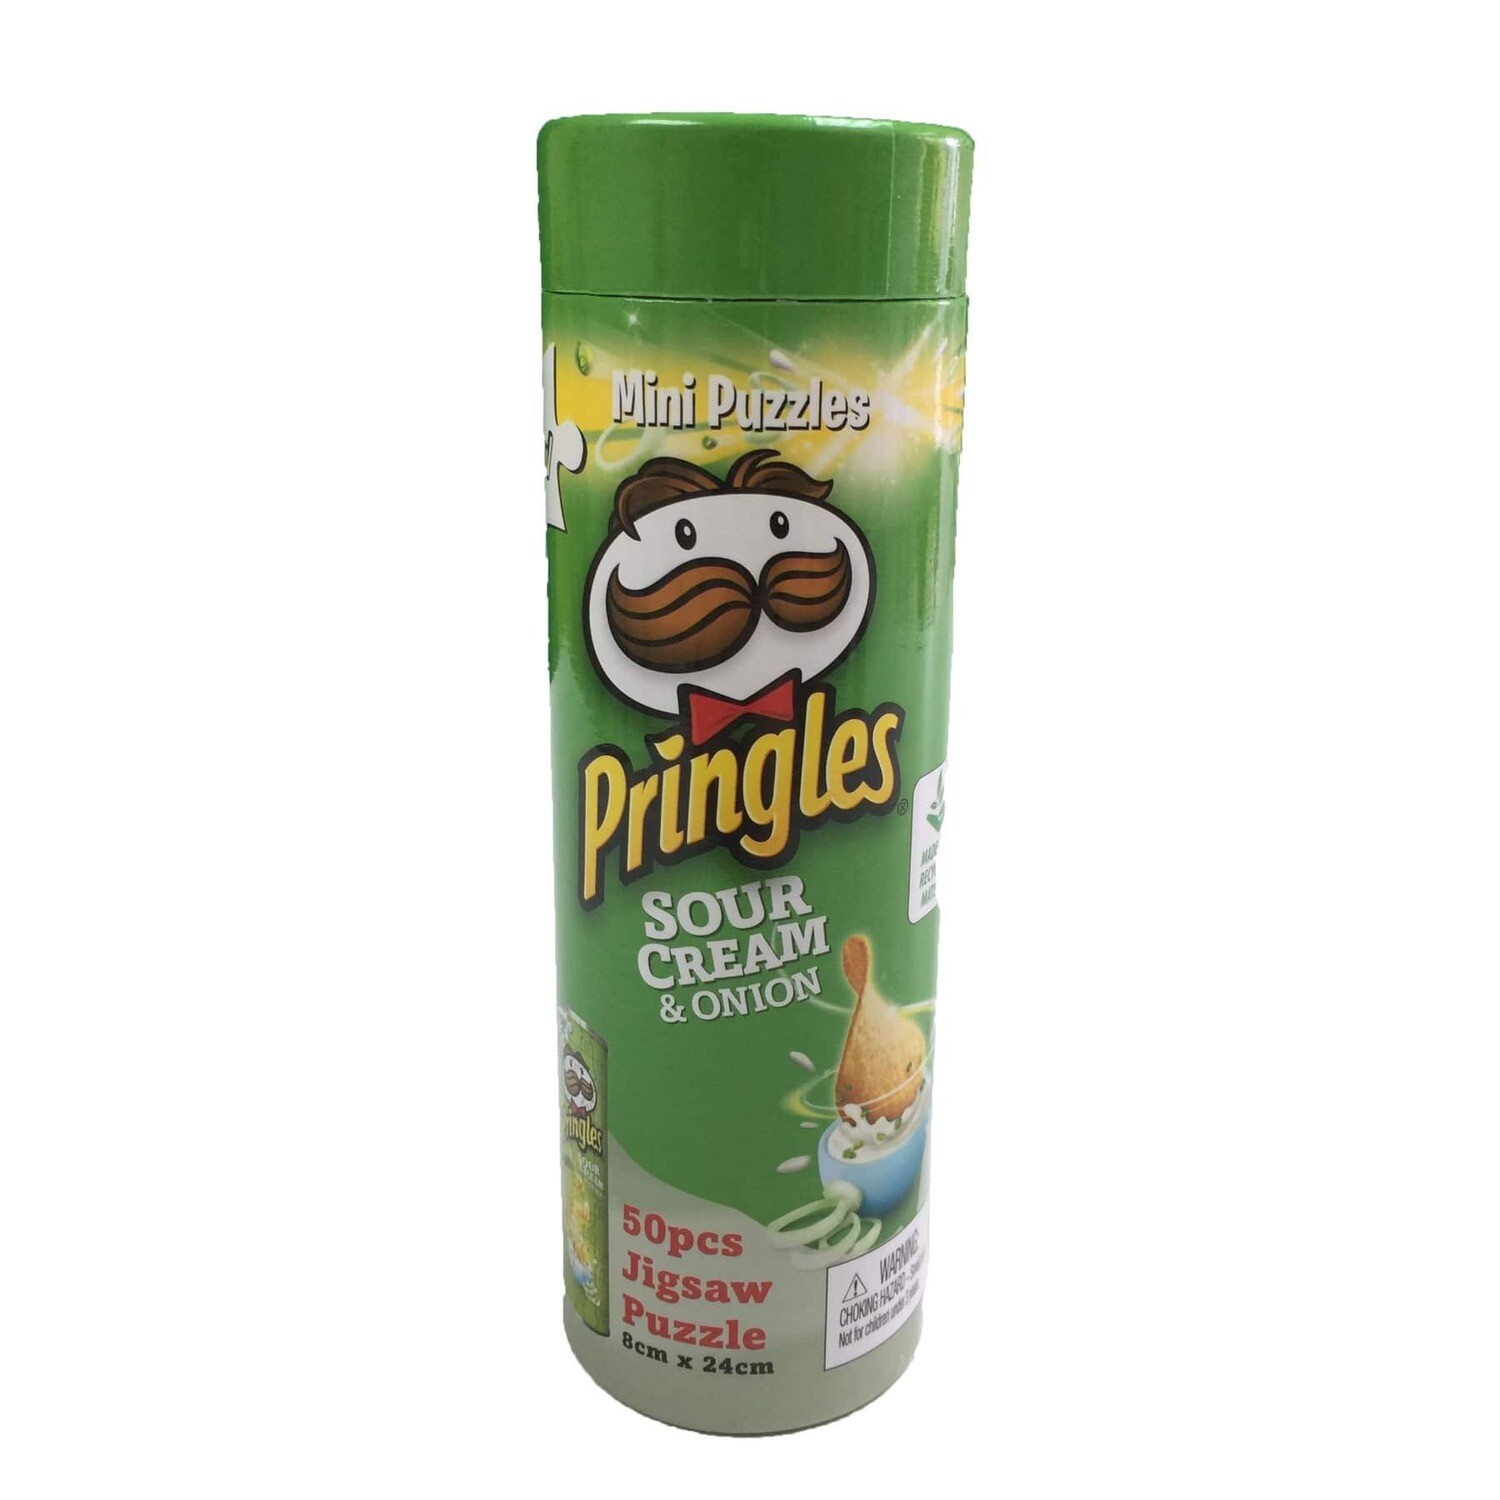 Pringles-Sour Cream & Onion 50Pc Puzzle #21099B – Store – Inspired